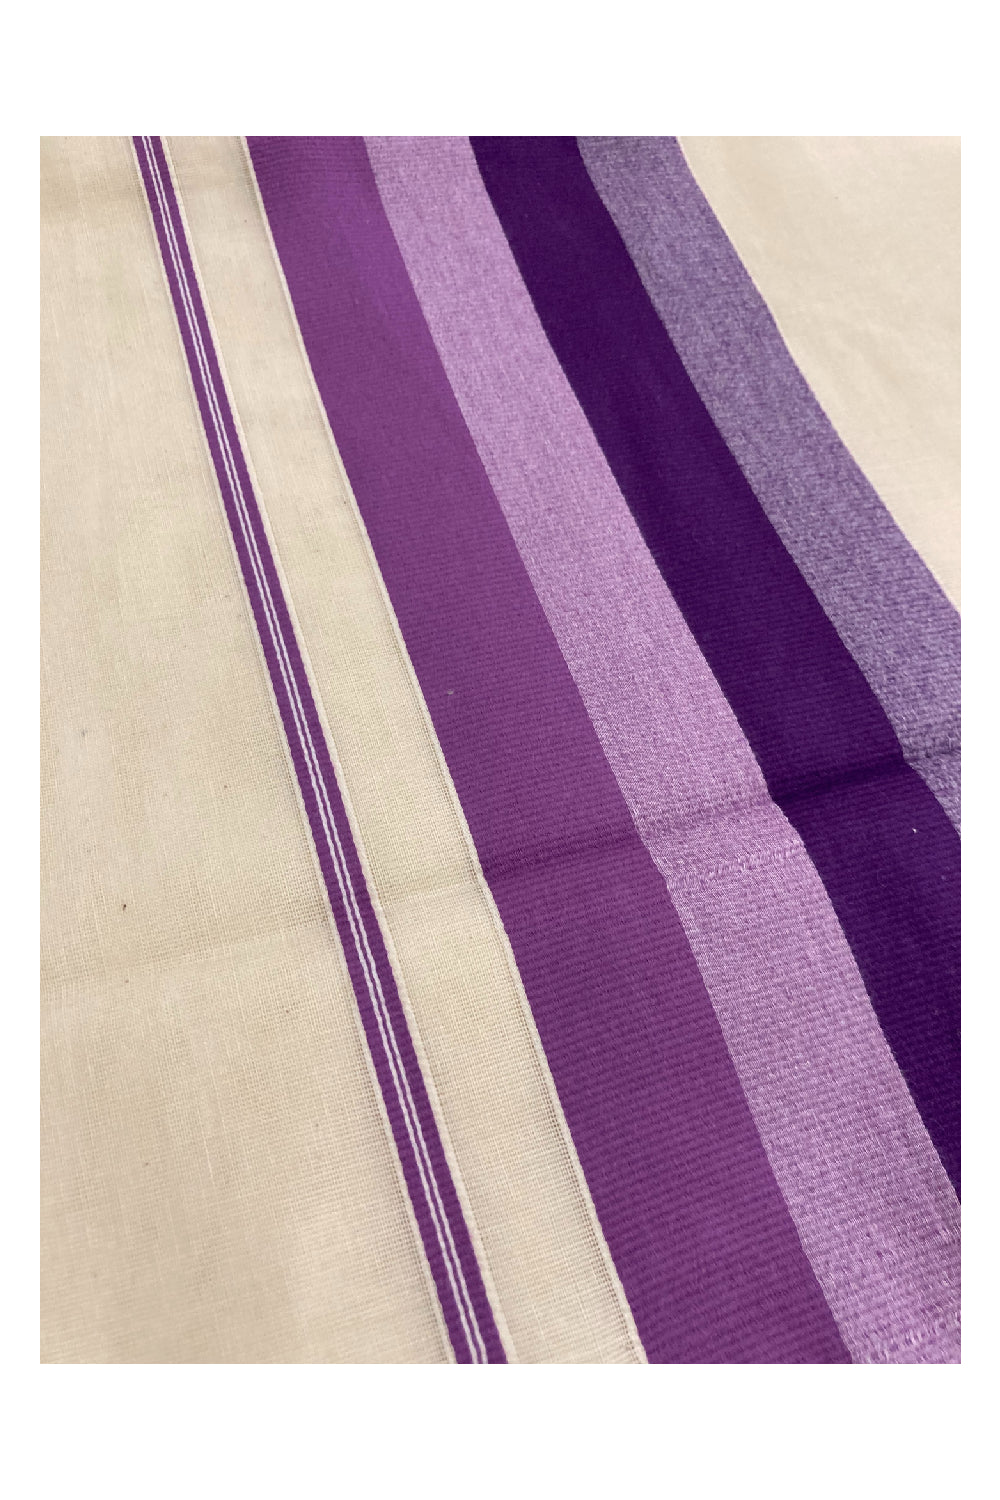 Kerala Cotton Saree with Violet Lines Border Design